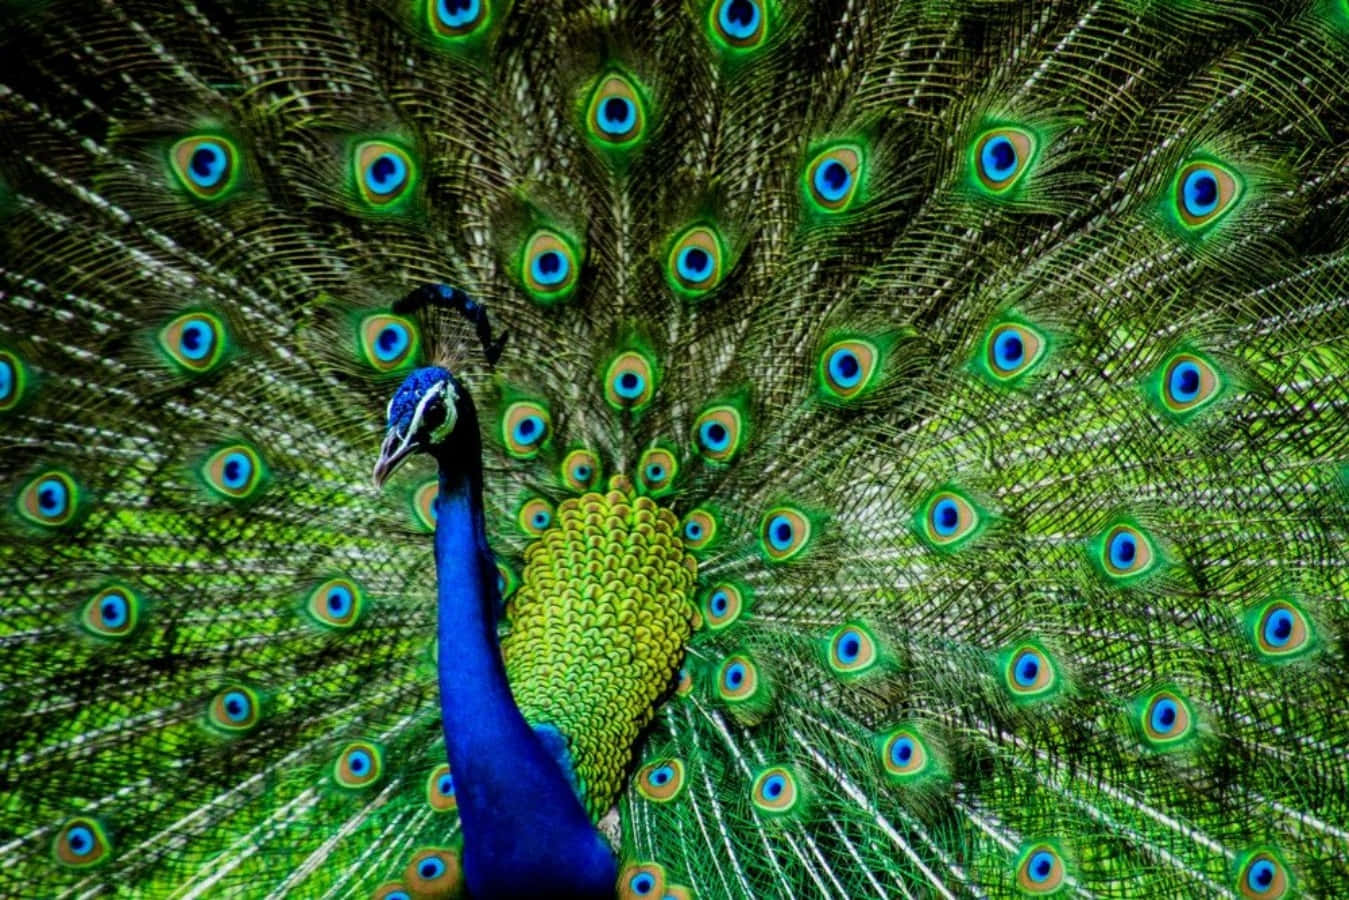 A Peacock Bird Showcasing Its Splendid Feathers